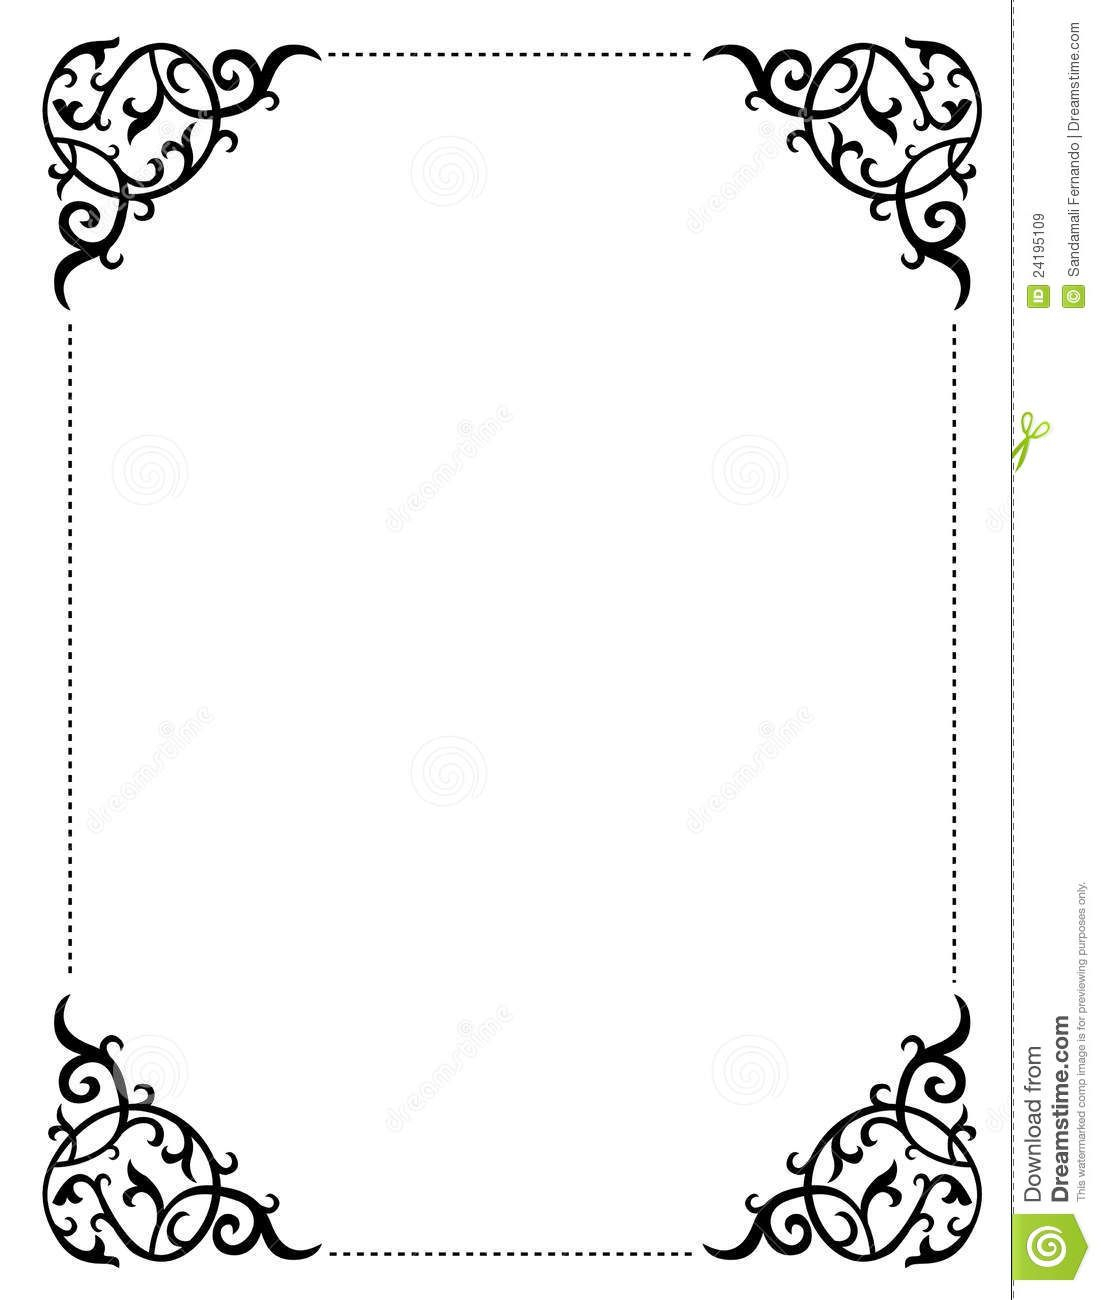 Free Printable Wedding Clip Art Borders And Backgrounds Invitation - Free Printable Clip Art Borders